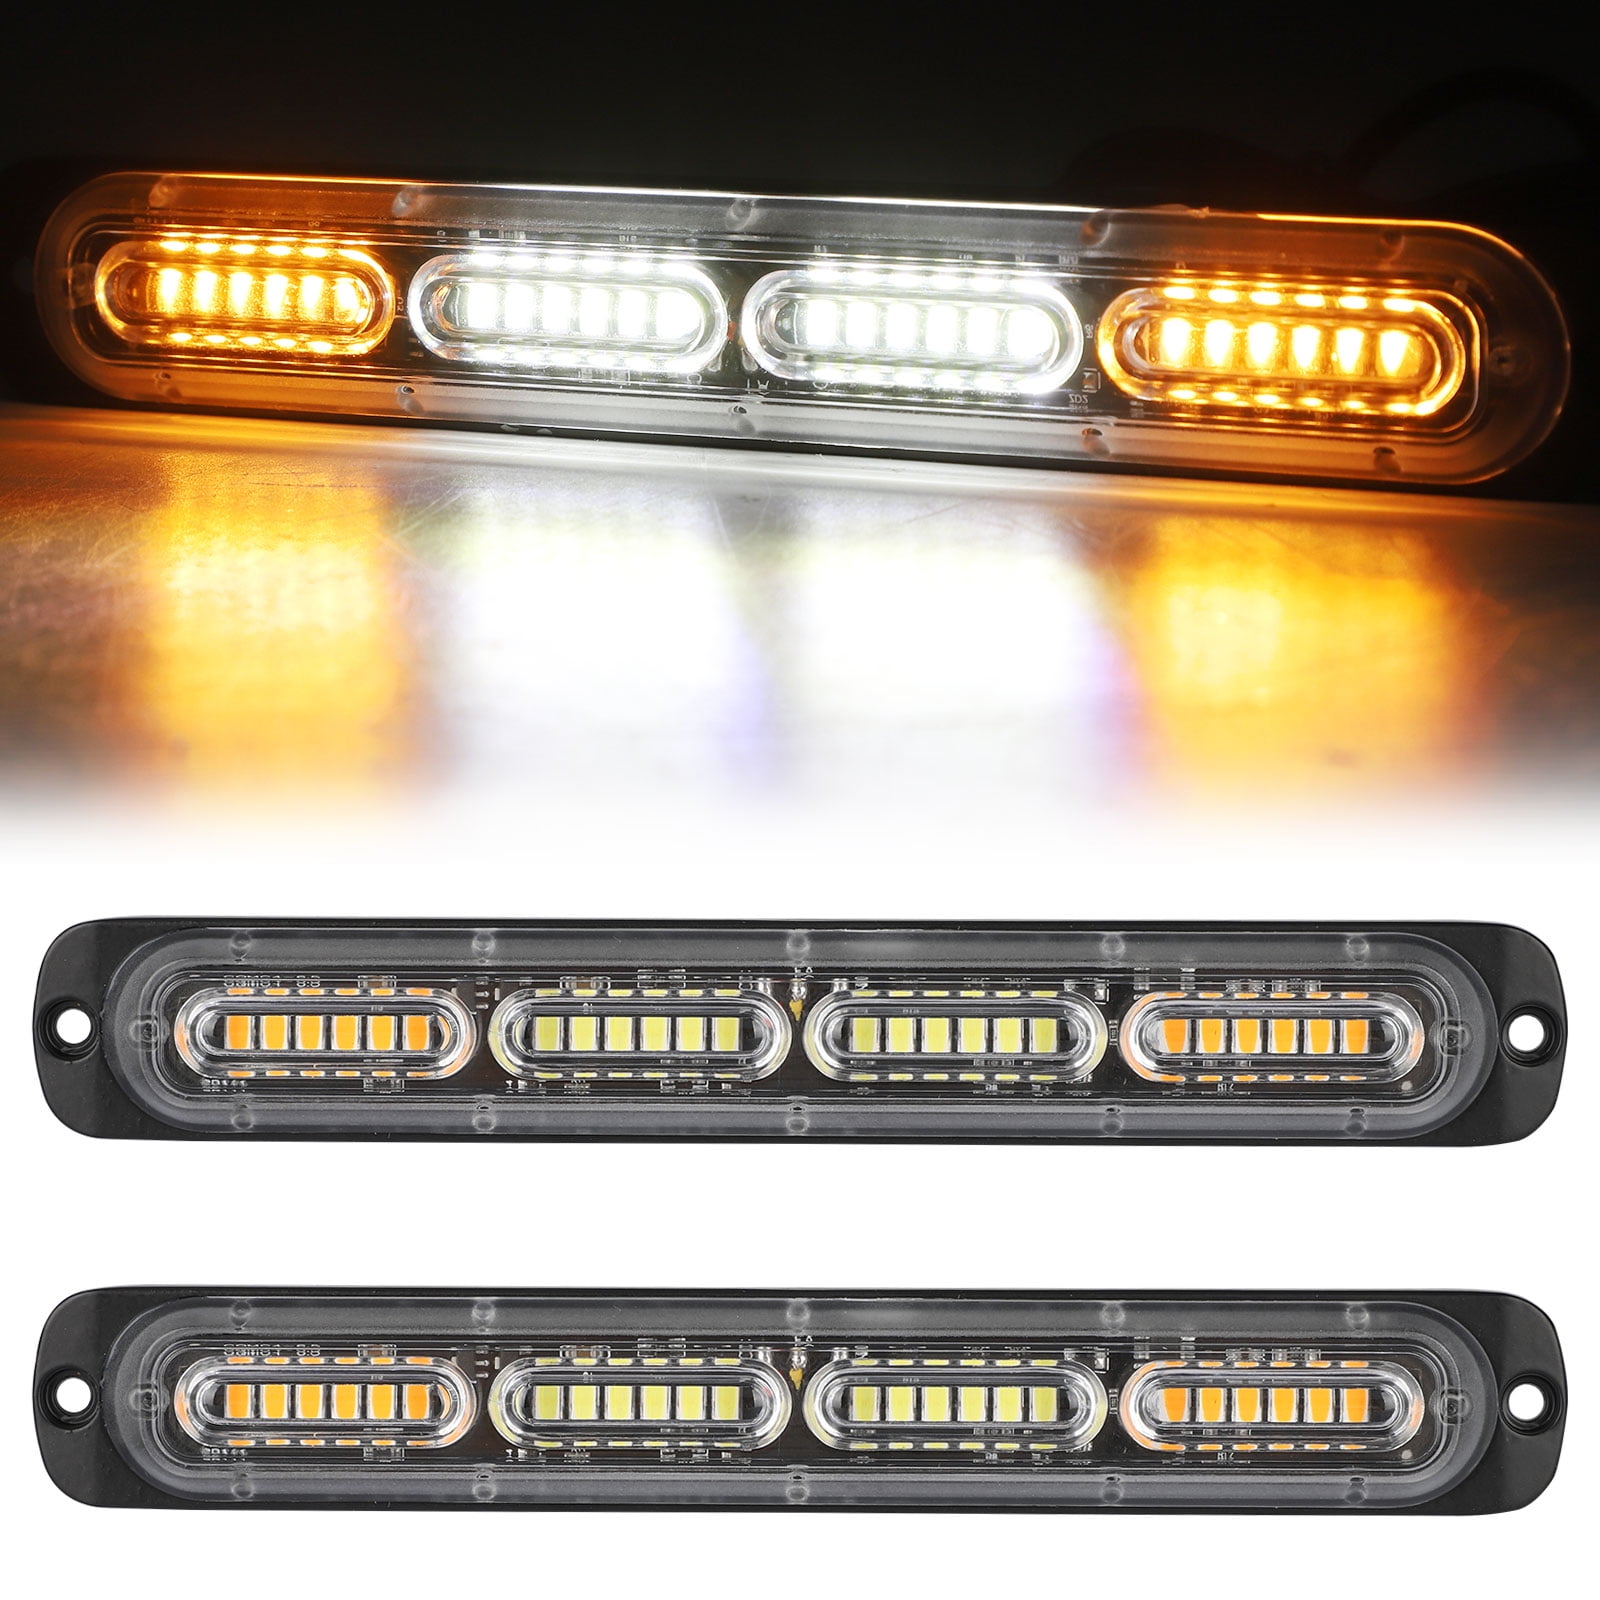 2x 4 LED 4W Work Vehicle Grill Strobe Emergency Warning Side Light Amber 12/24V 